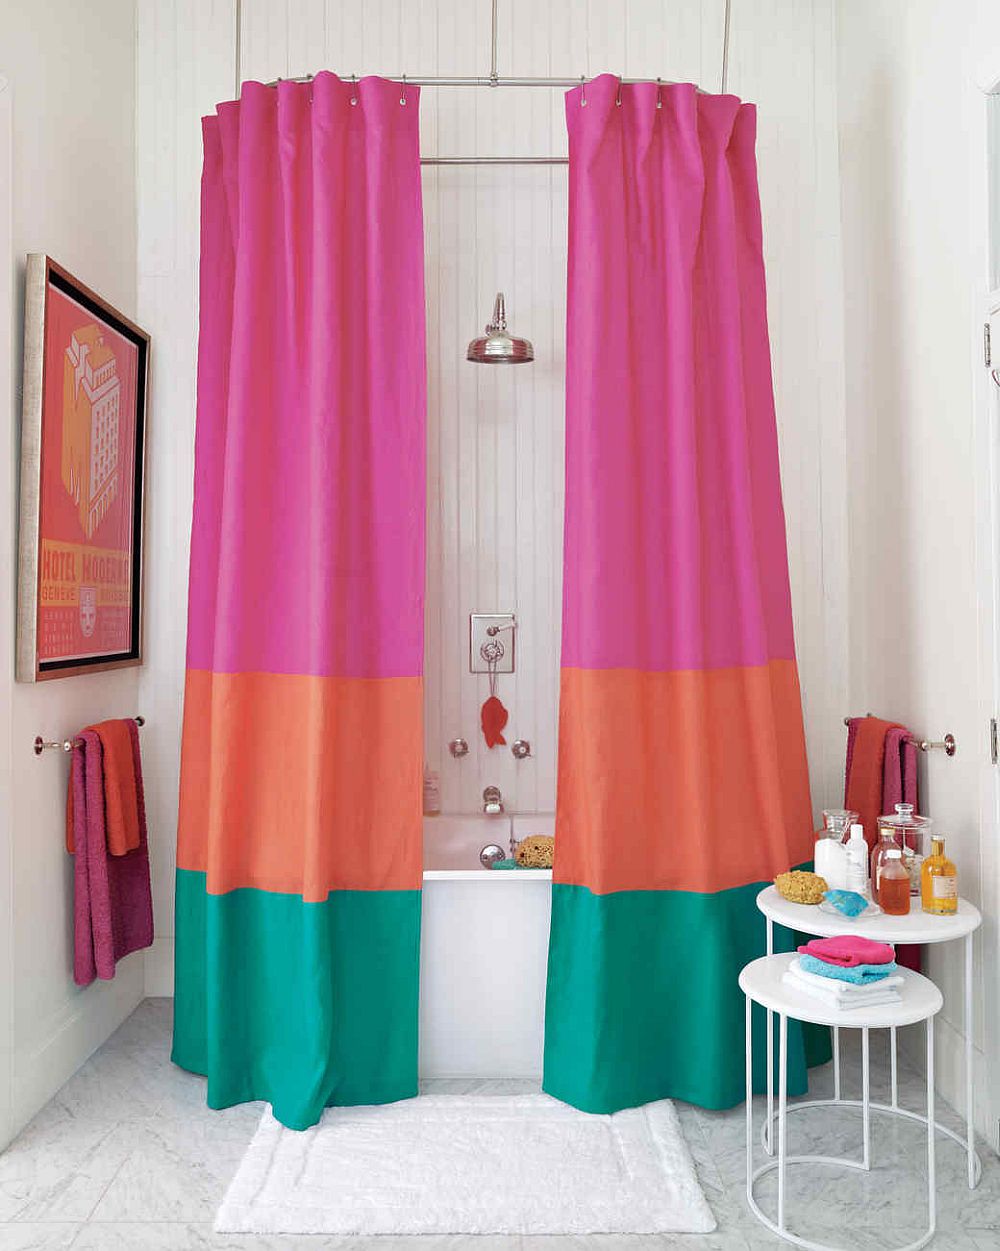 DIY Color-Block Shower Curtain